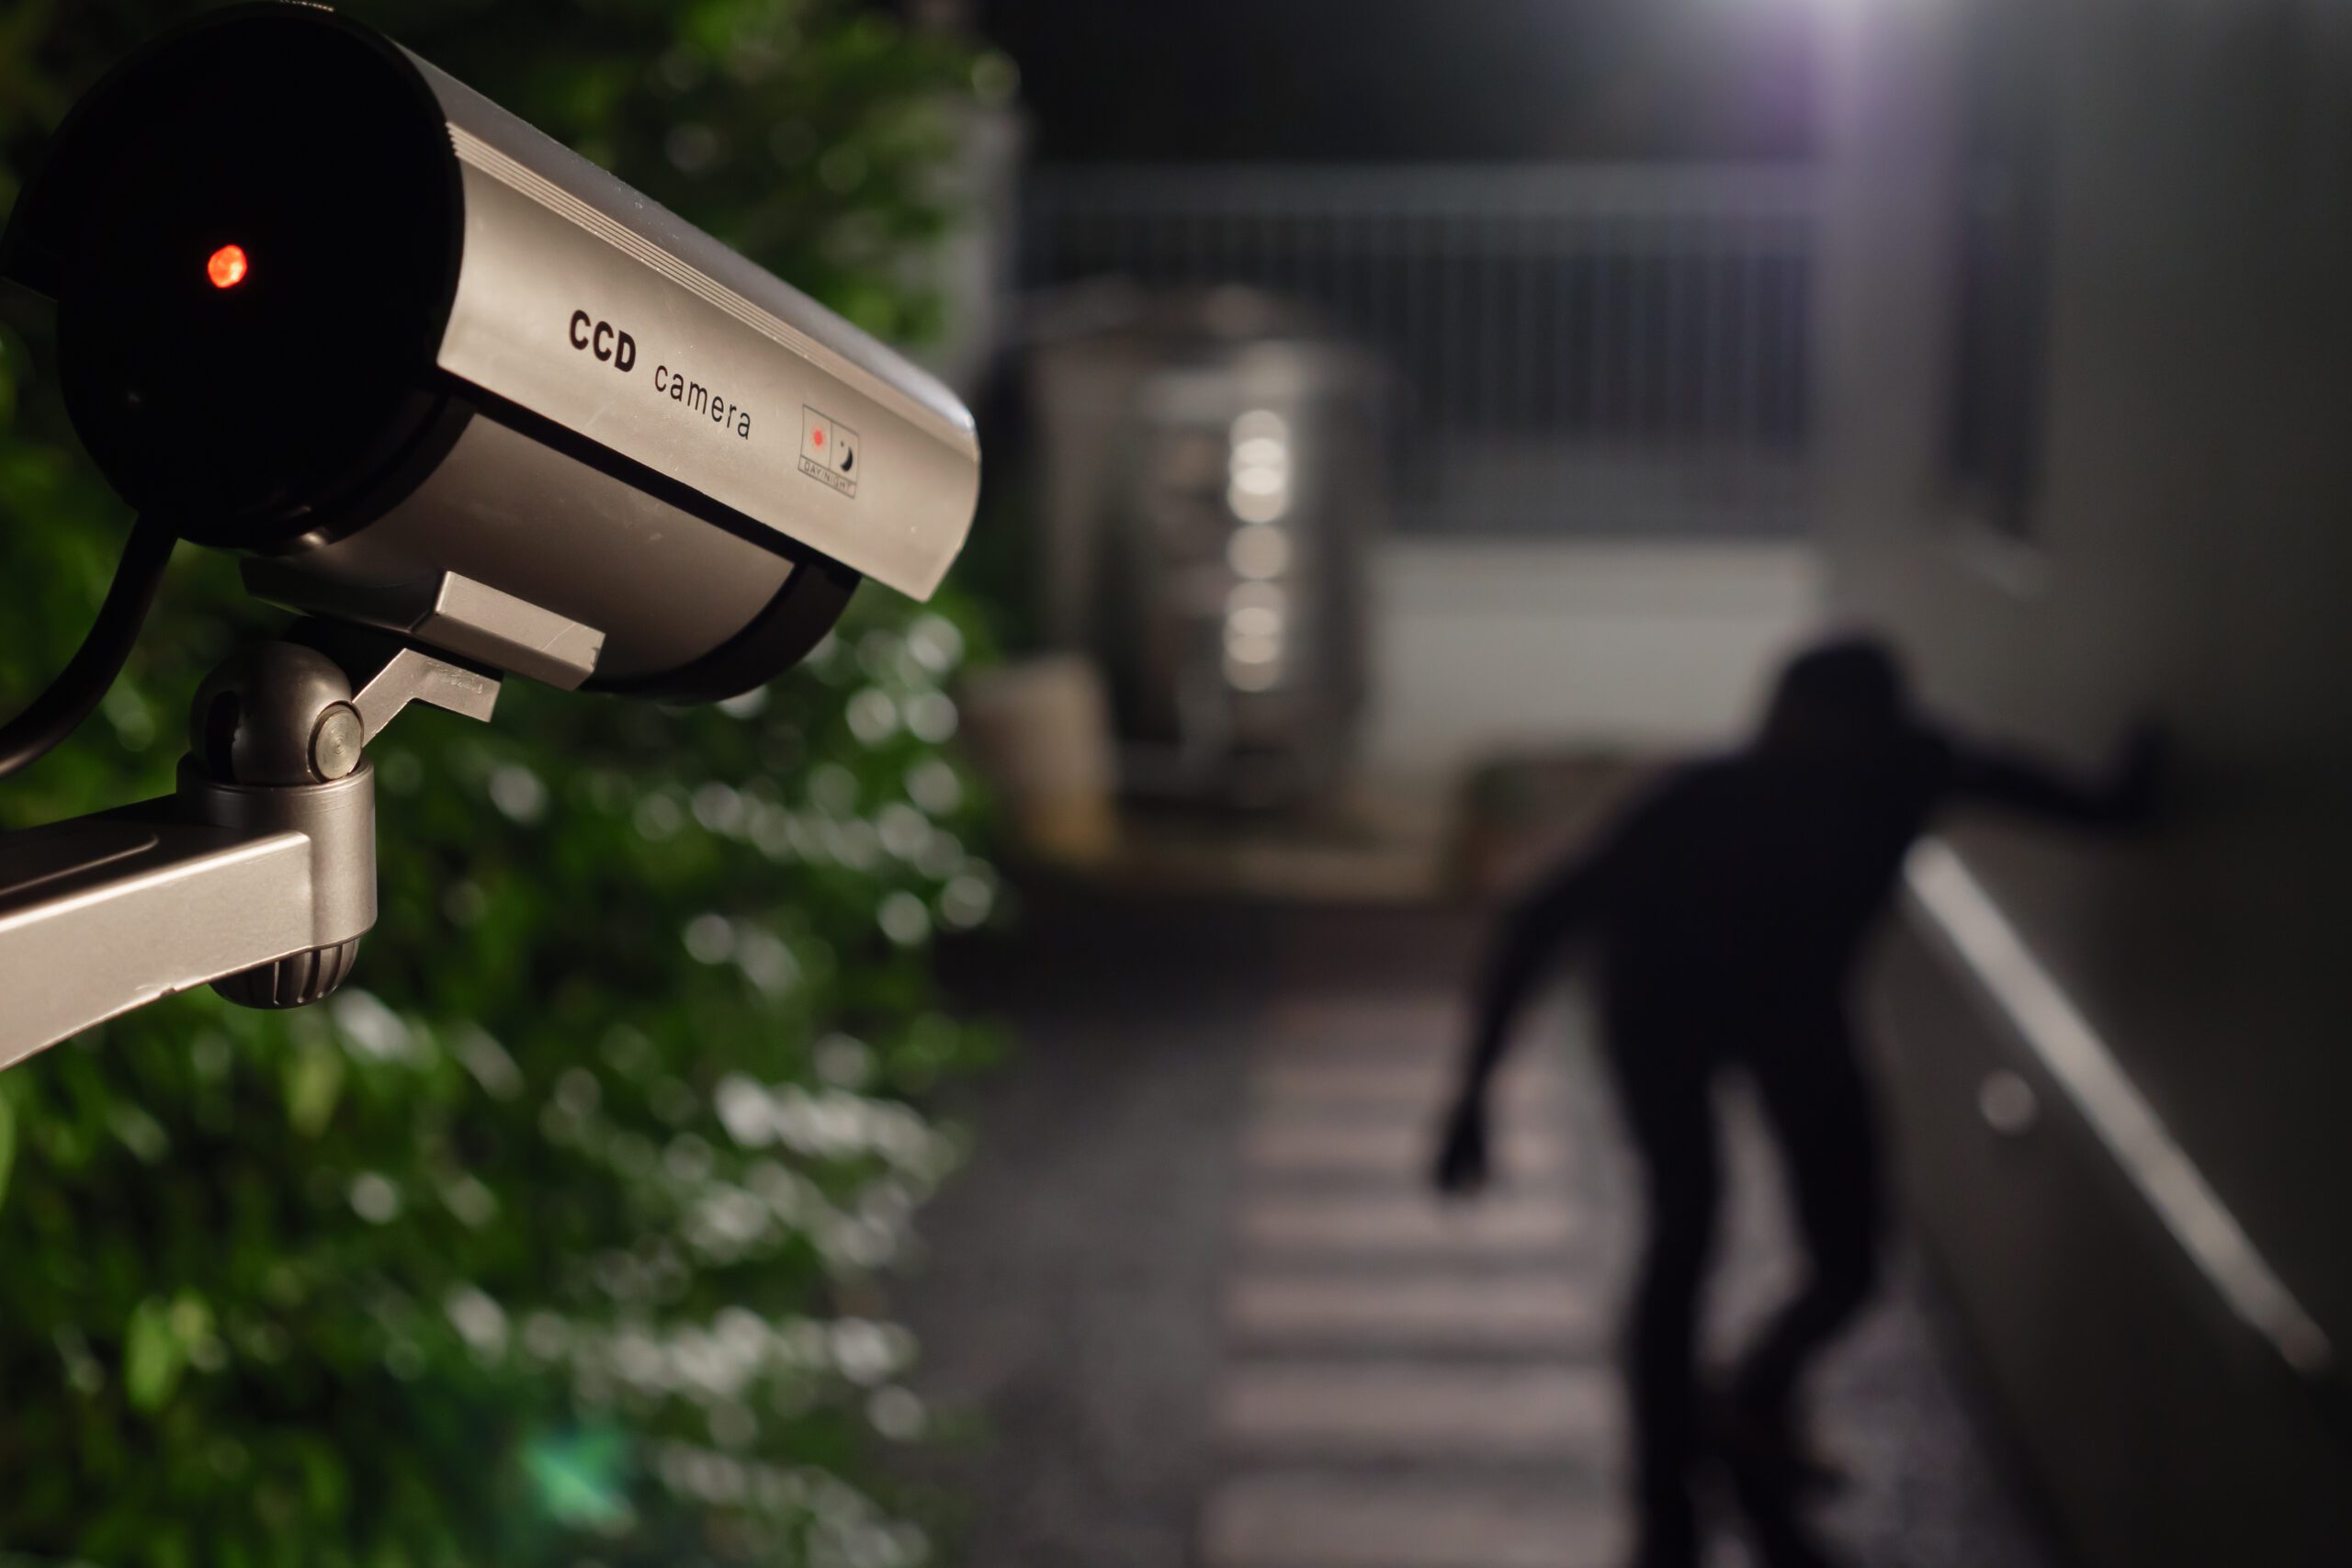 Security camera surveillance catching an intruder